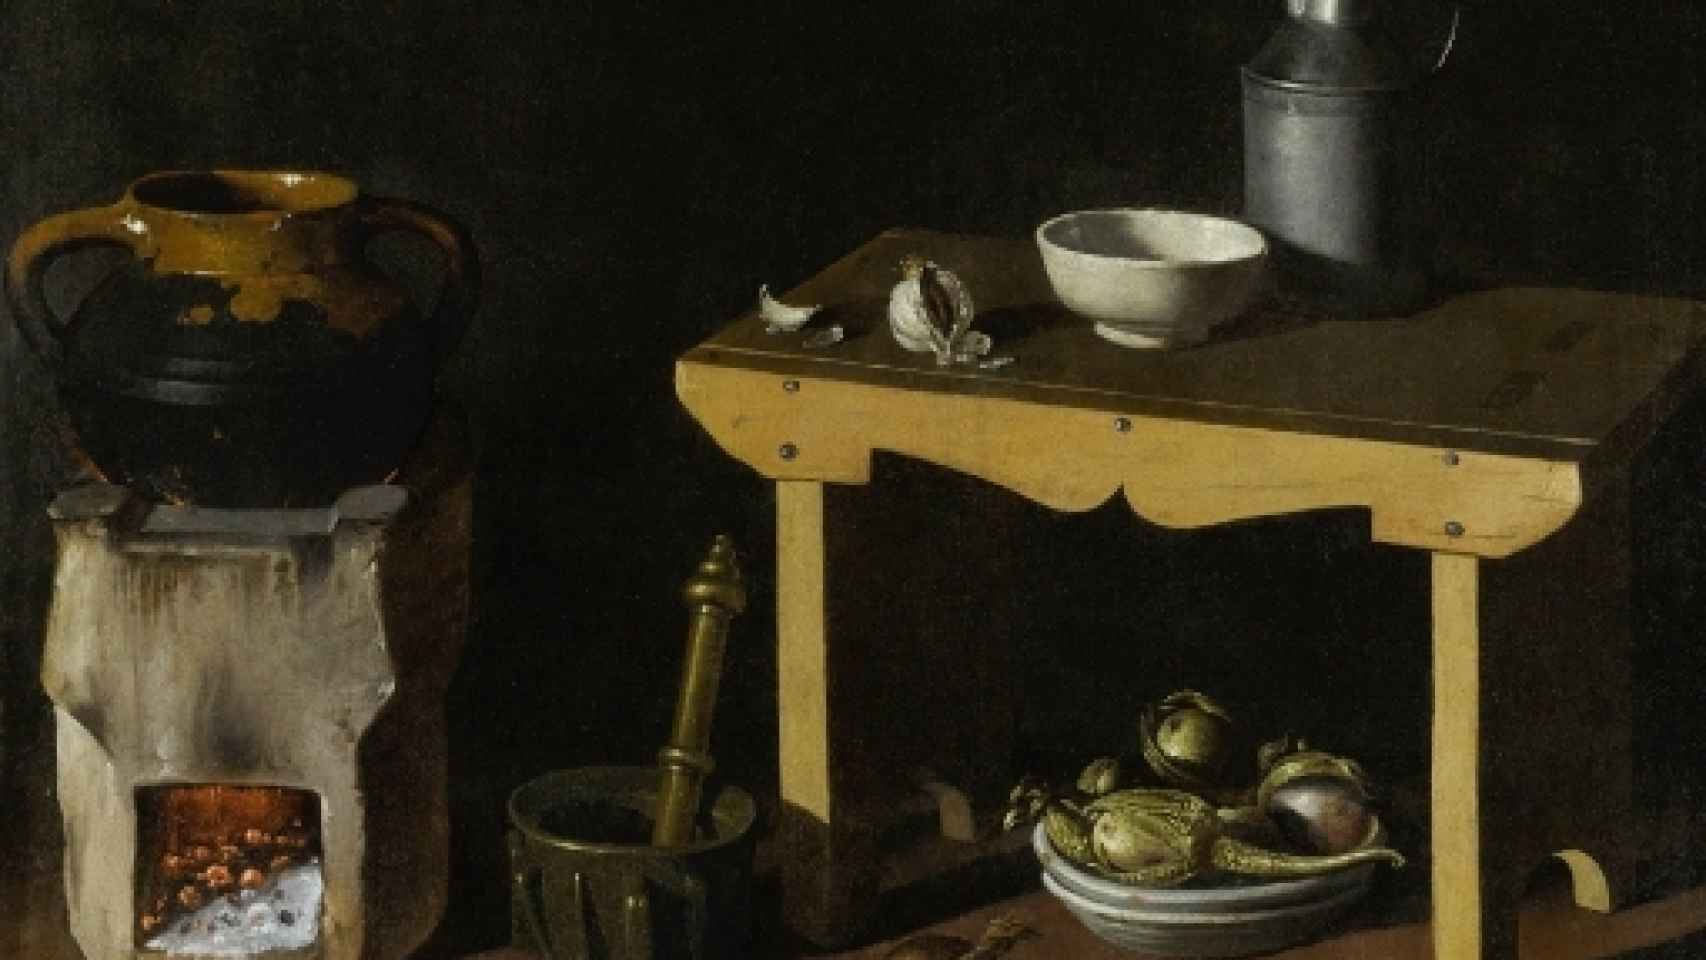 Image: Sale a subasta un bodegón atribuido a Velázquez